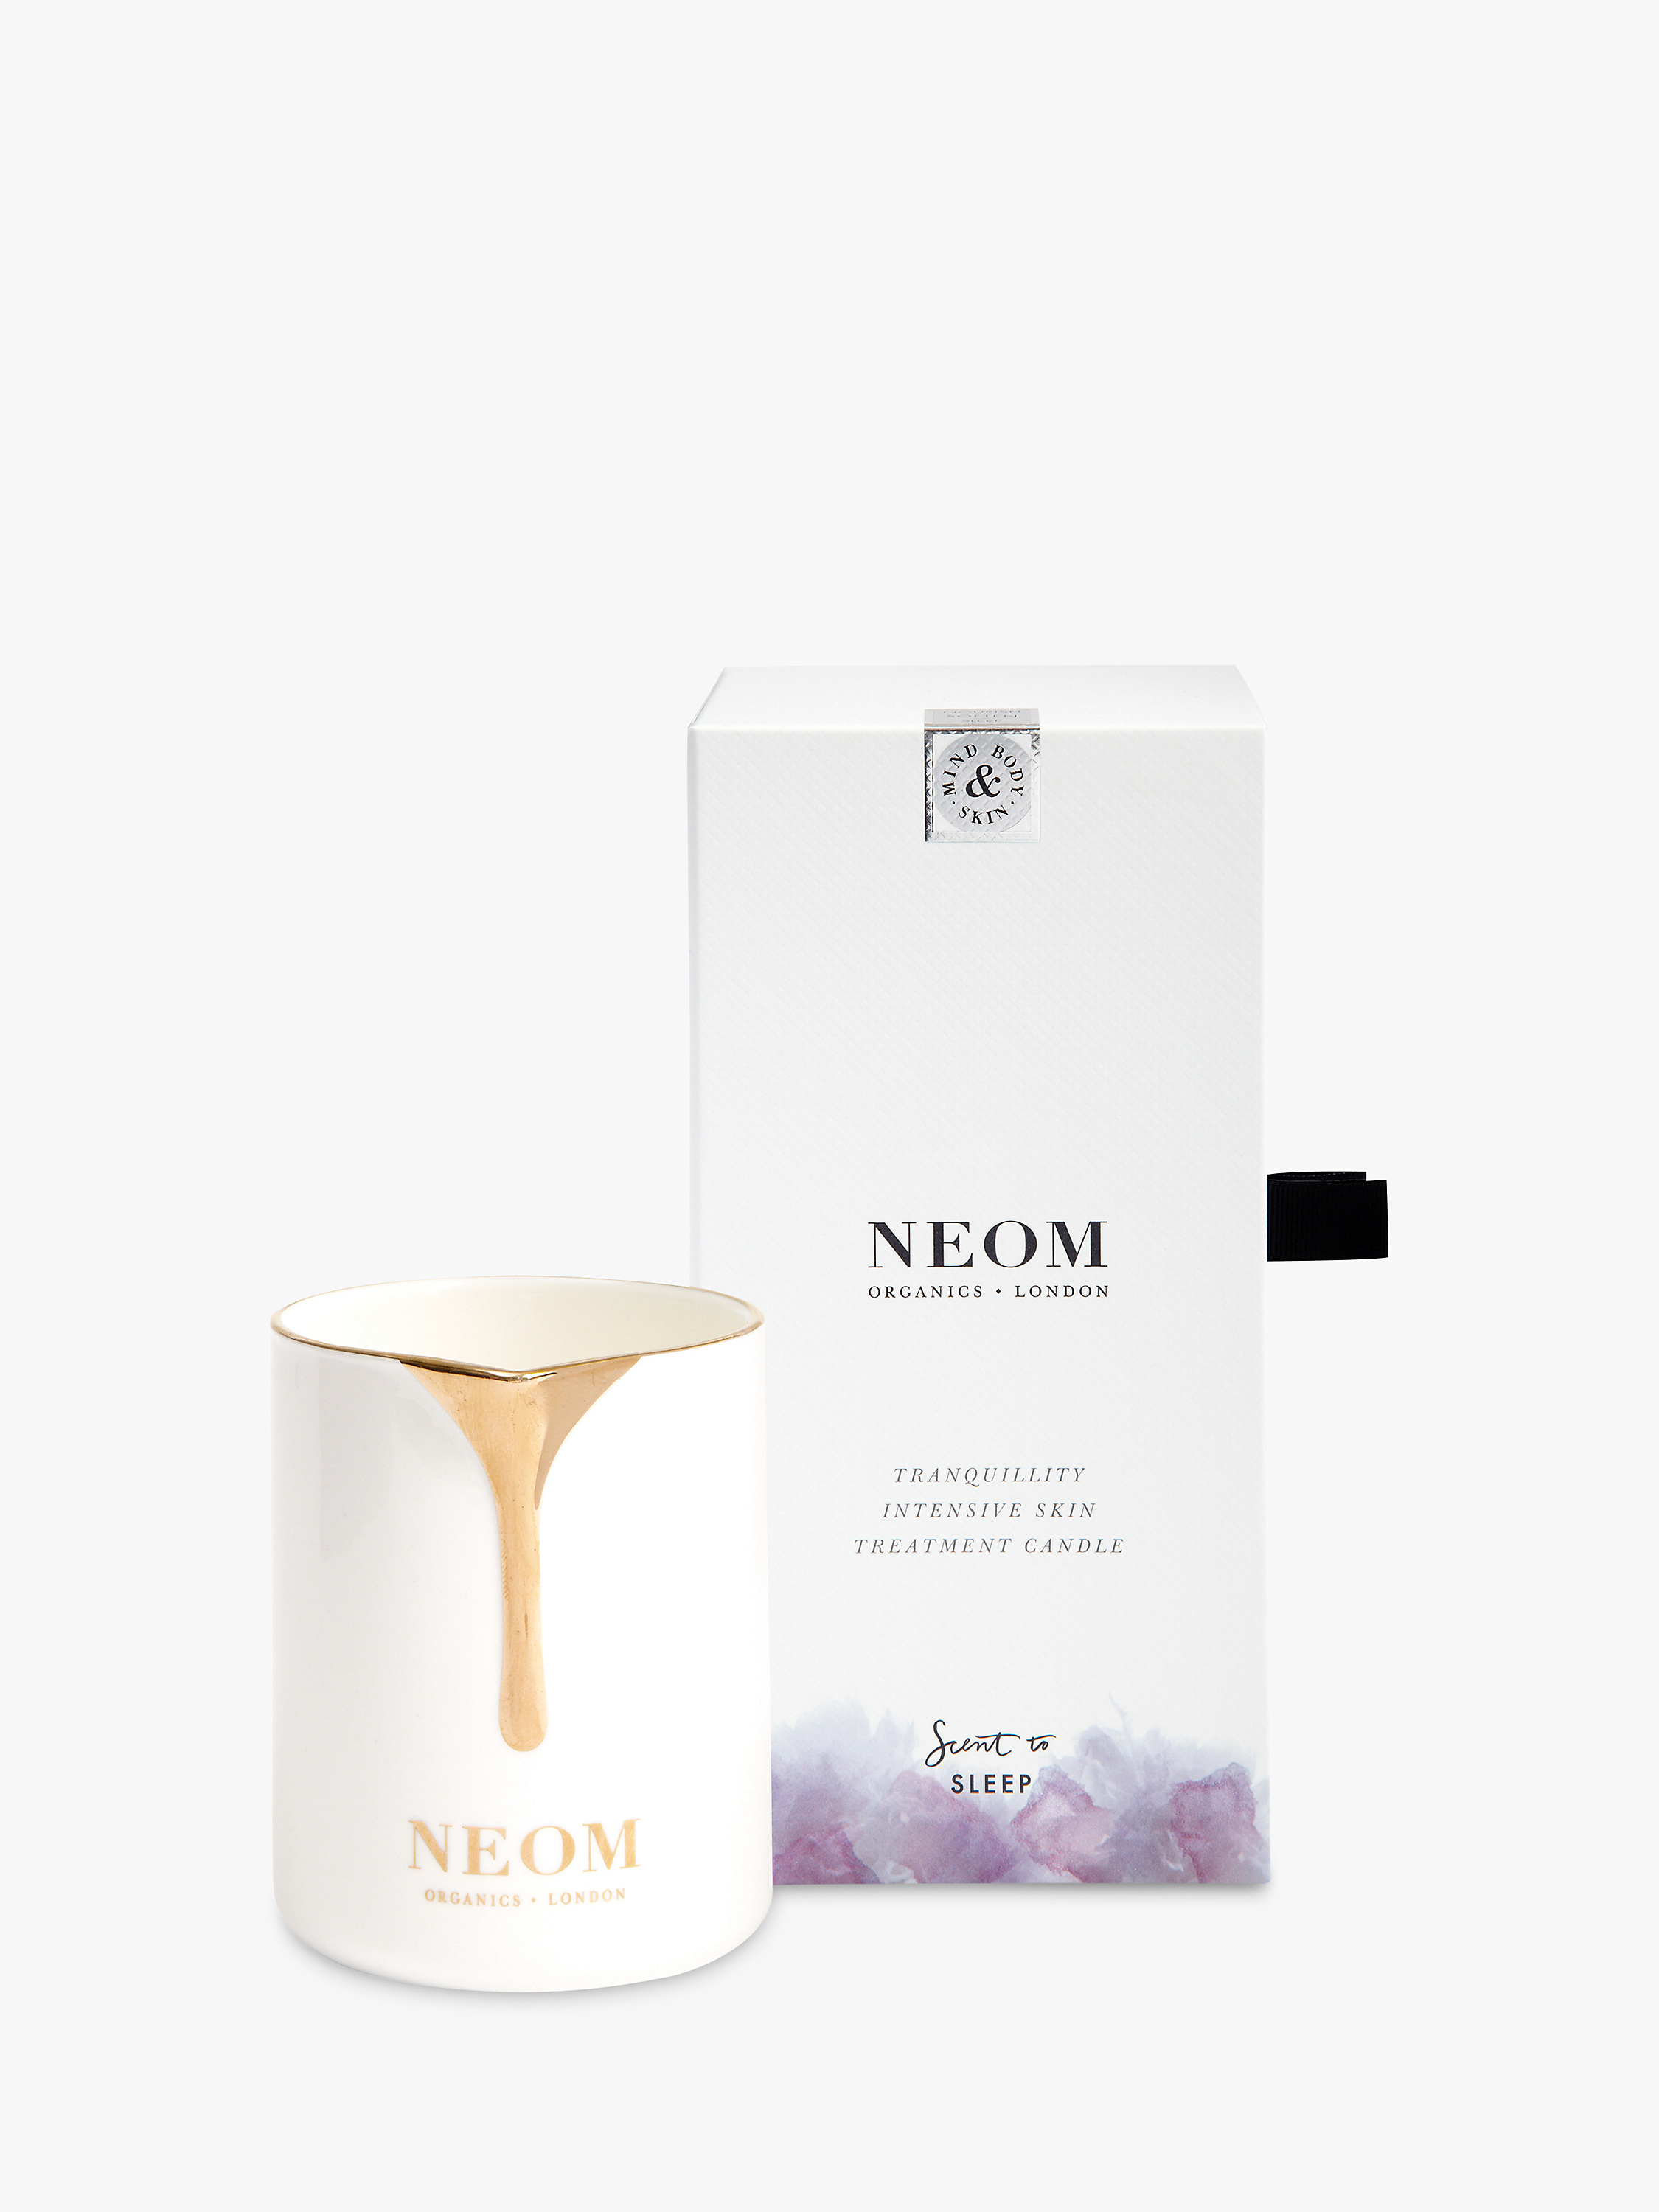 Neom Organics London Tranquility Skin Treatment Candle